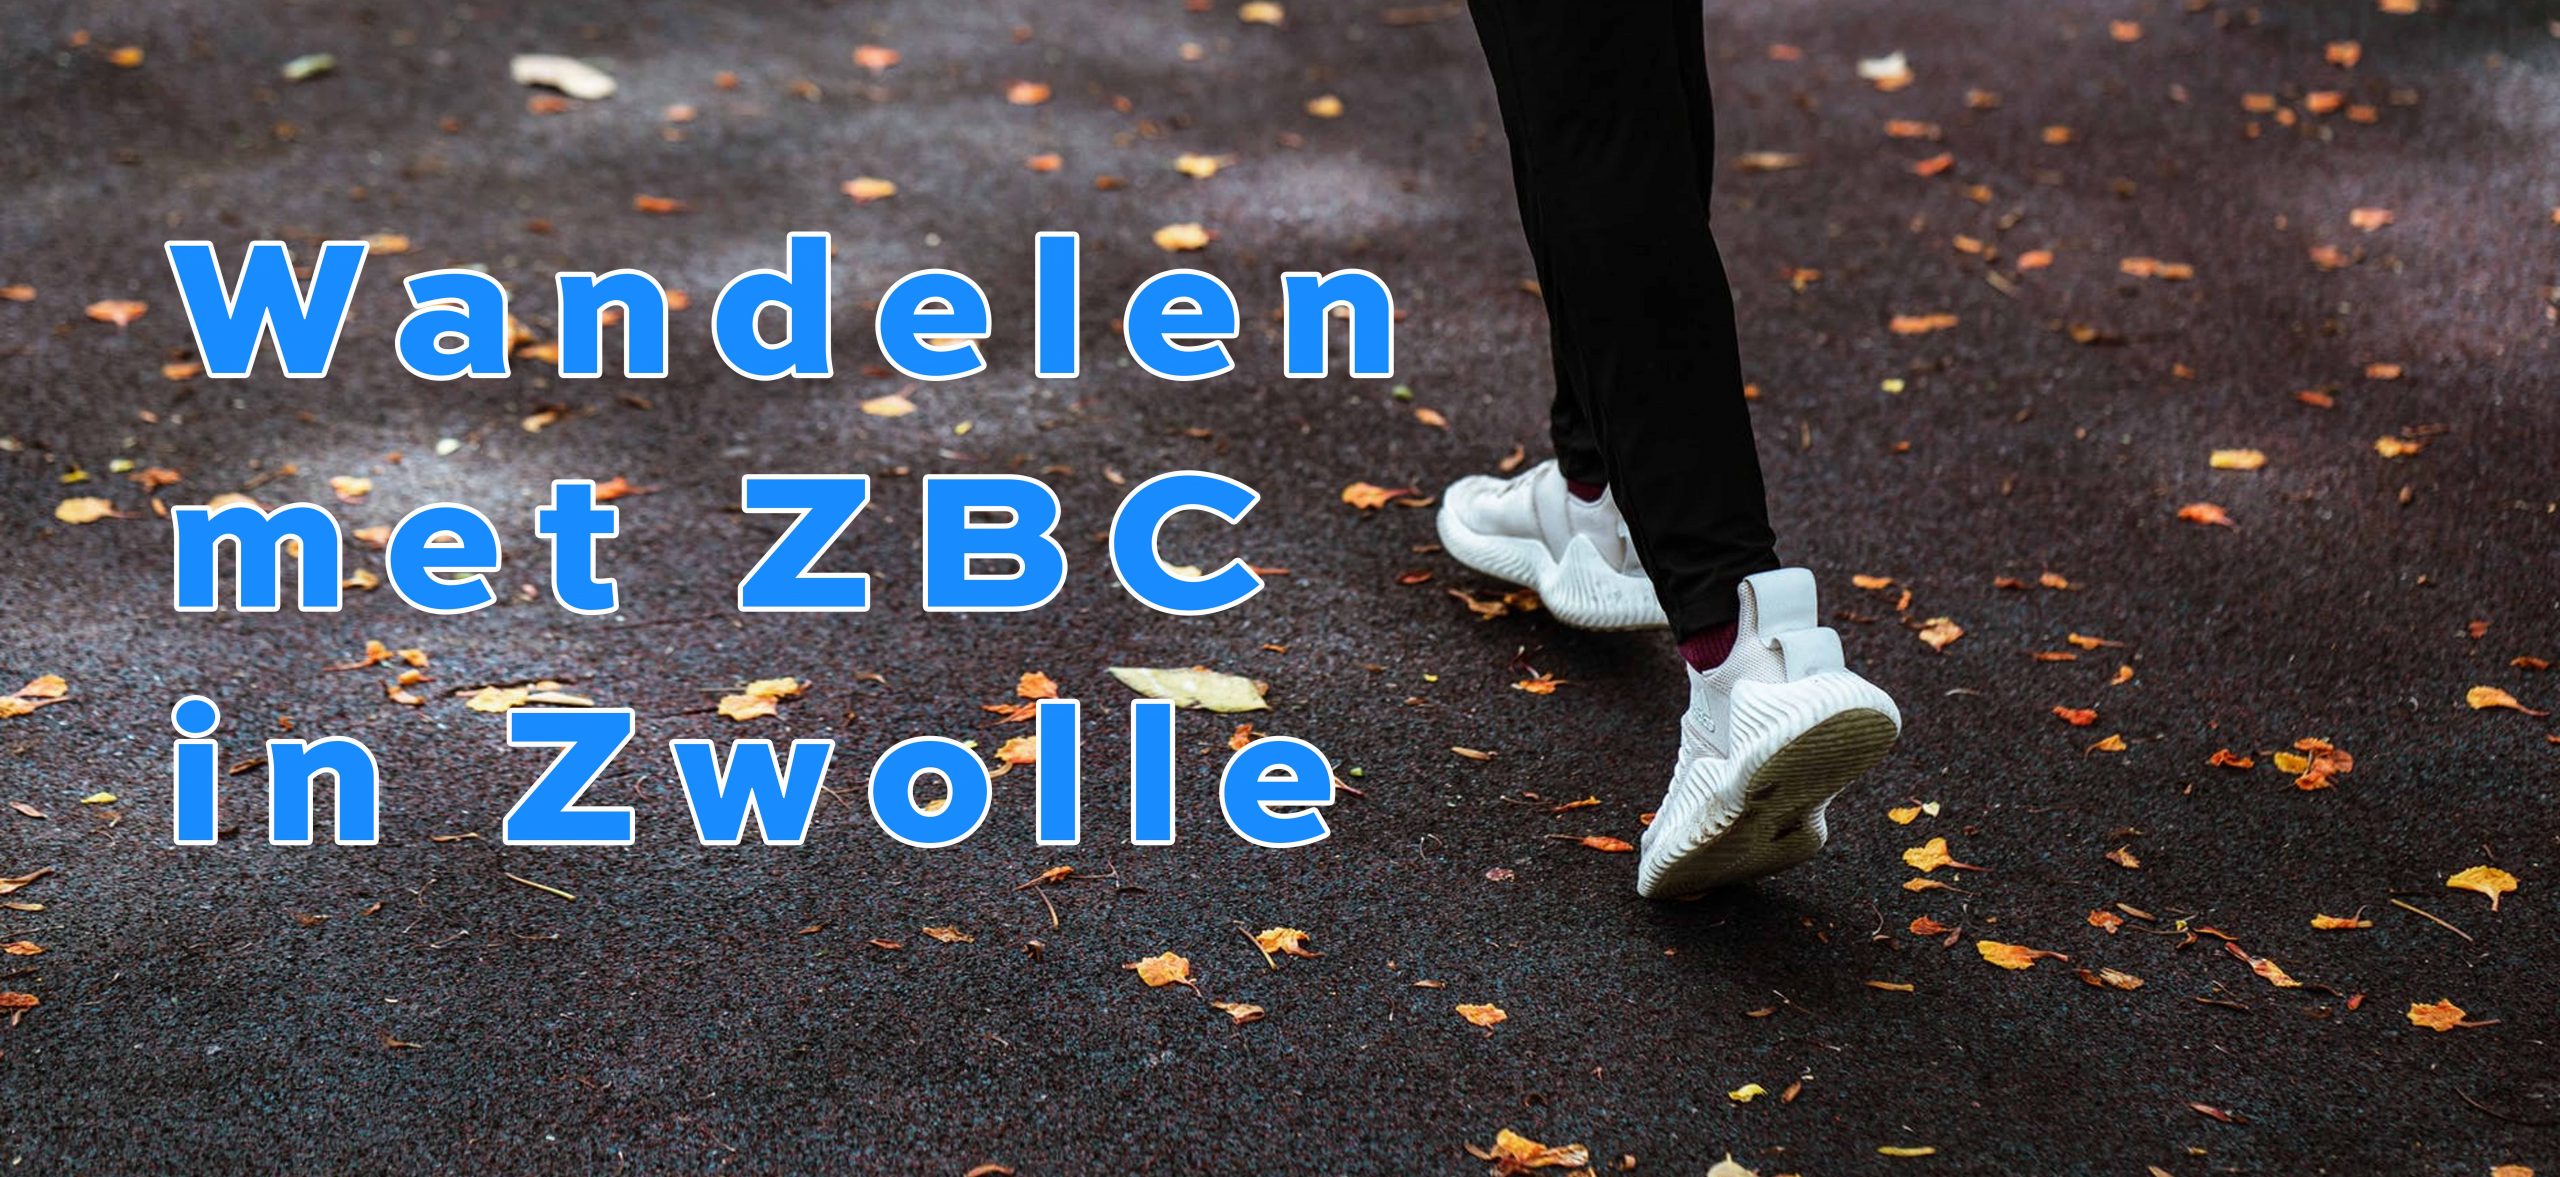 Wandelen met ZBC in Zwolle.